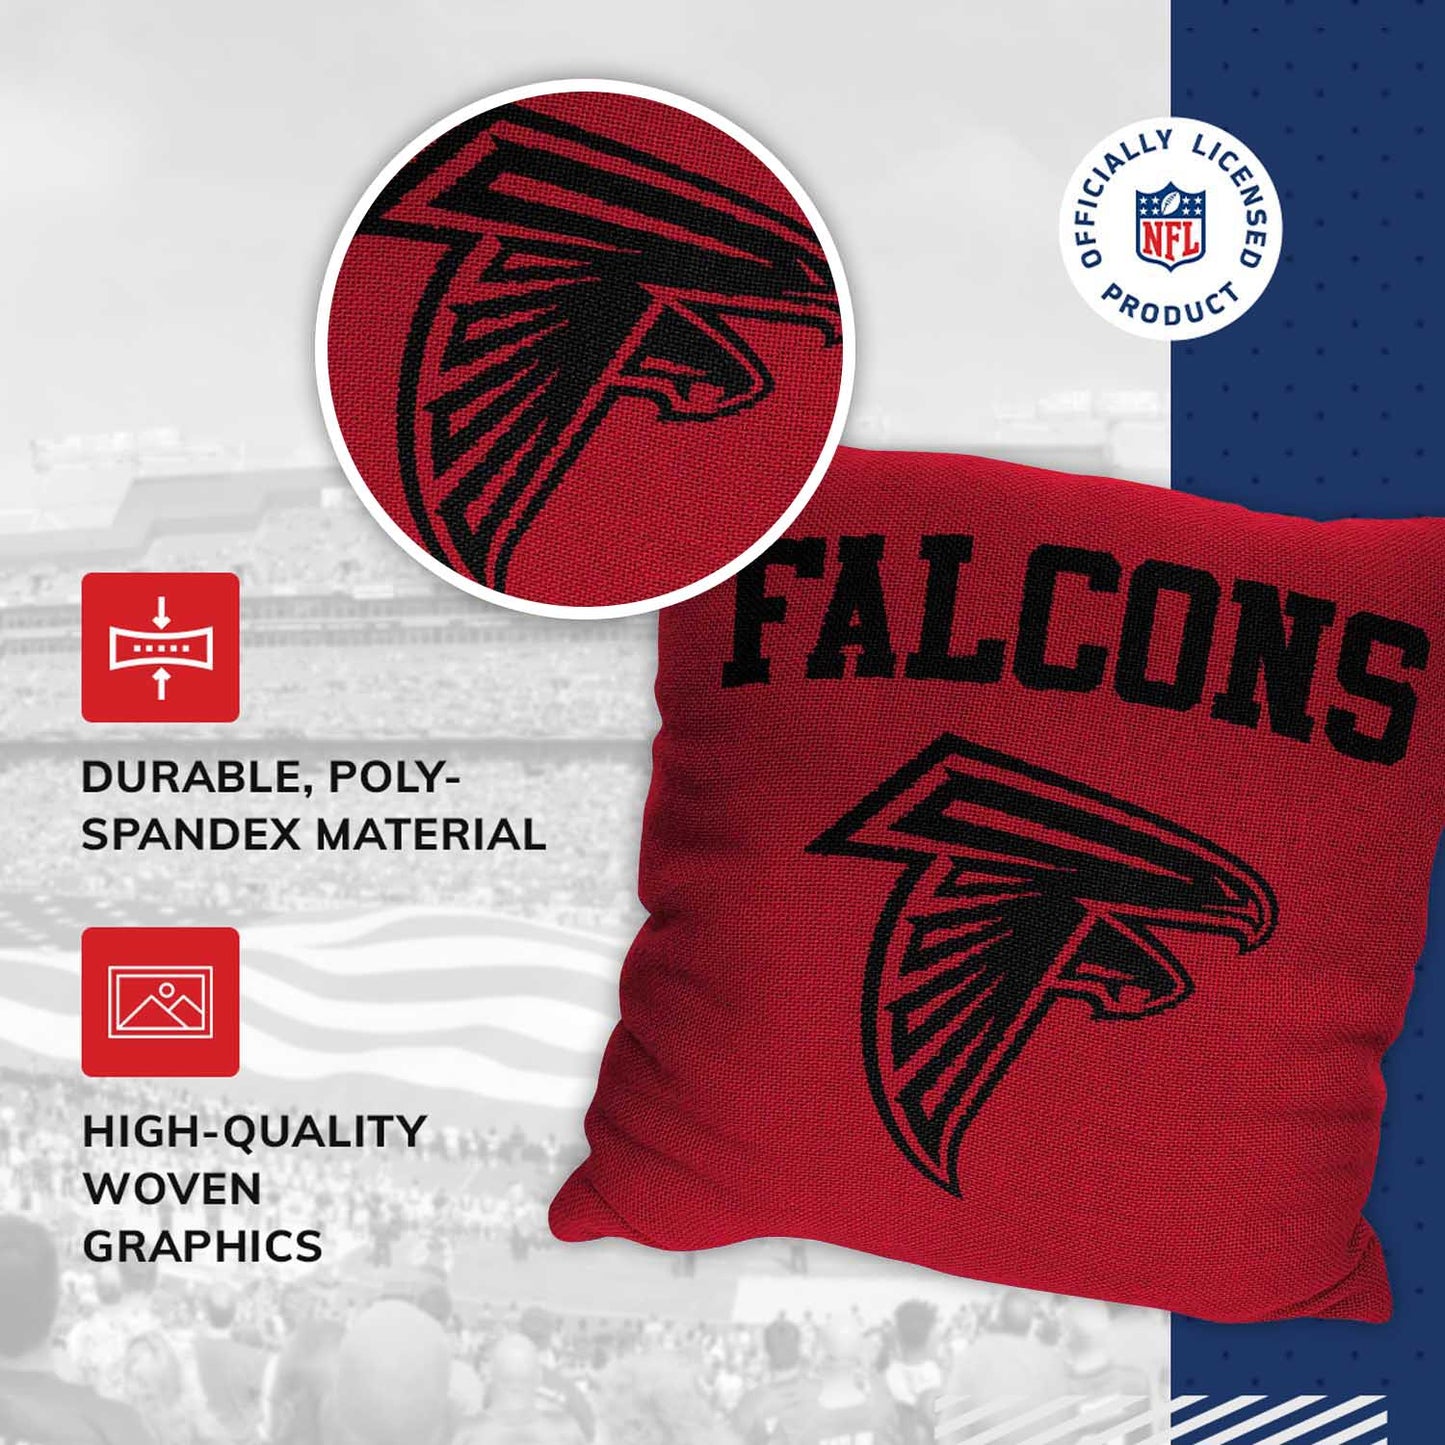 Atlanta Falcons NFL Decorative Football Throw Pillow - Red